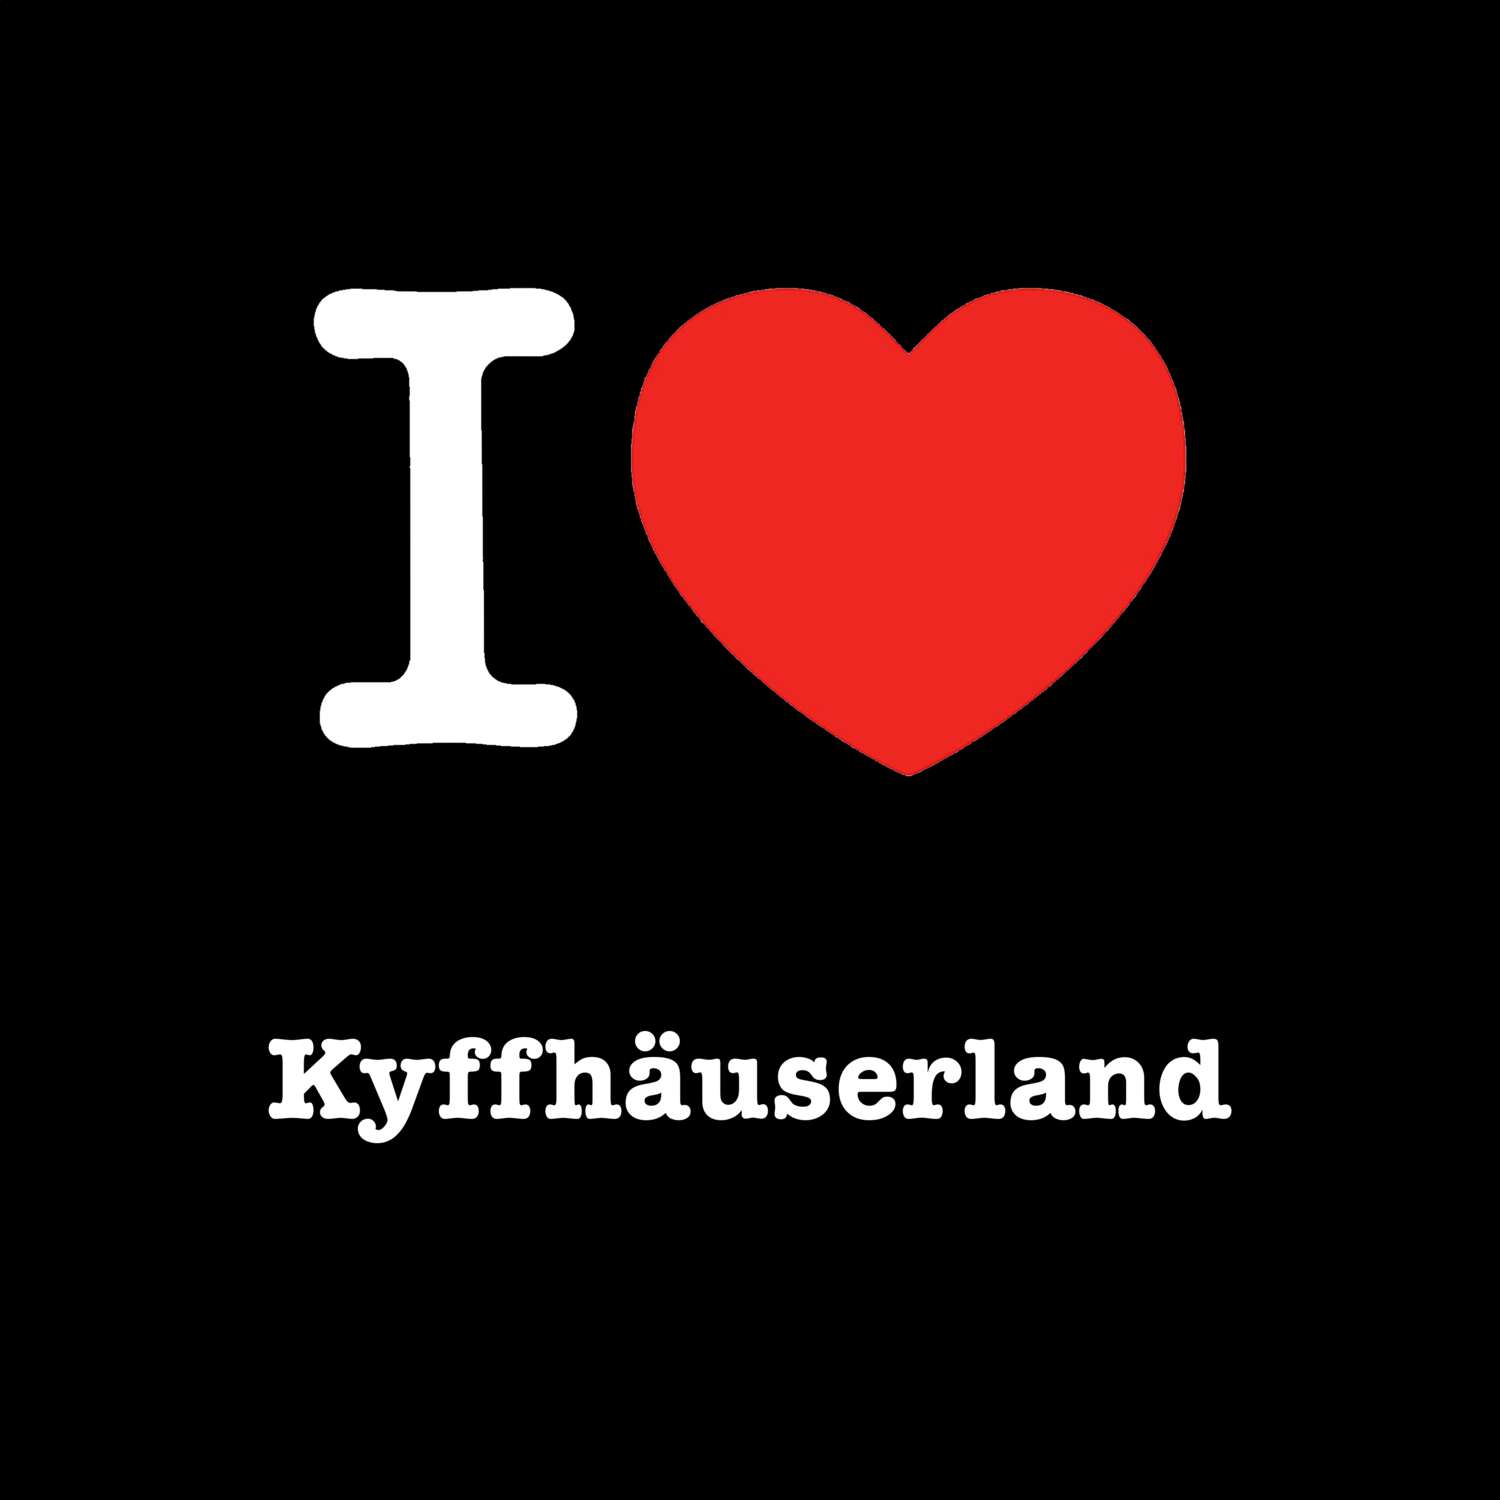 Kyffhäuserland T-Shirt »I love«